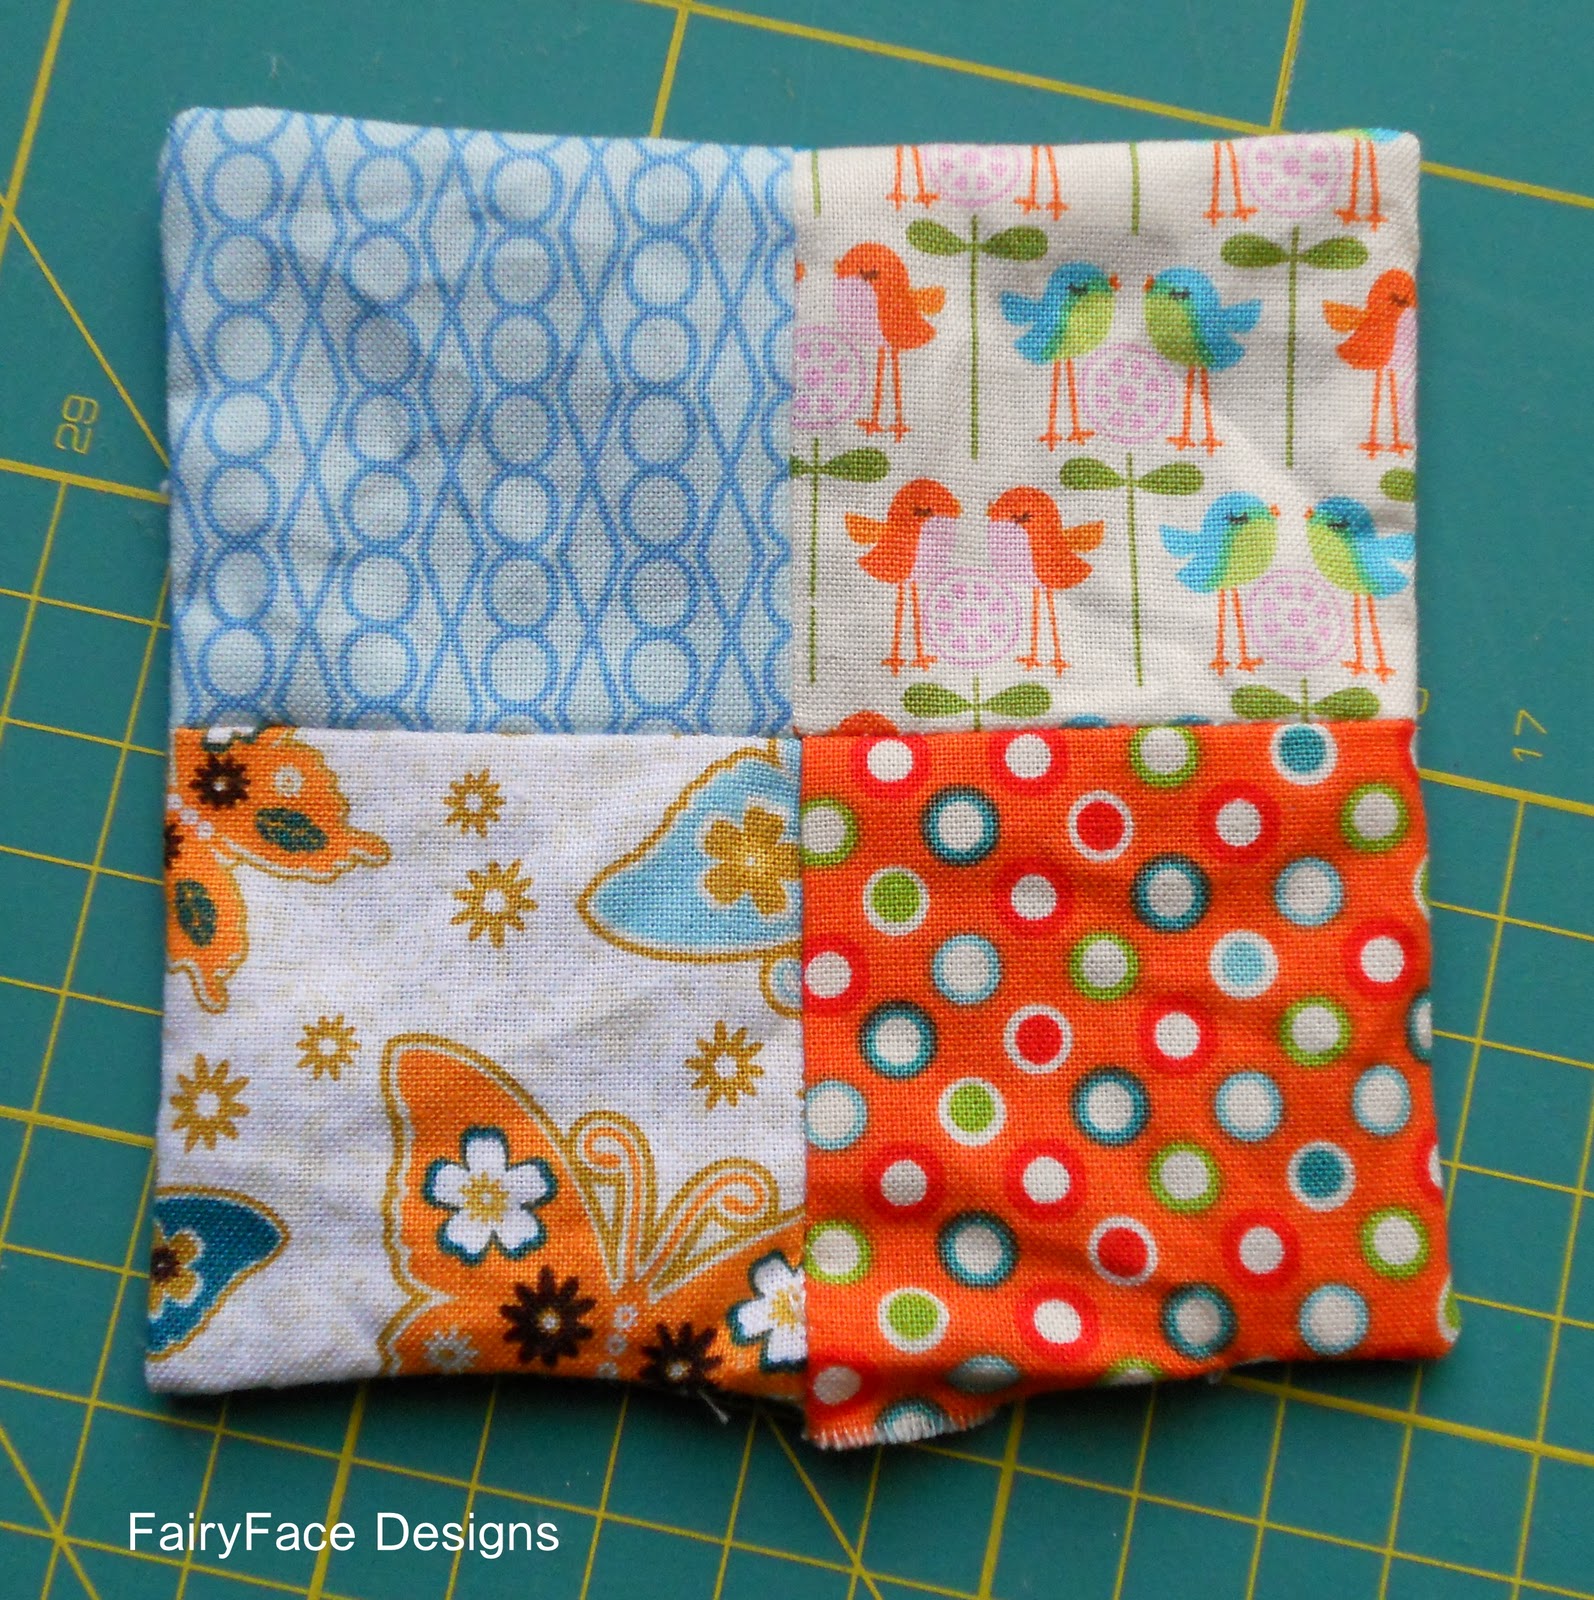 FairyFace Designs: {Sew} Get Started: Simple Pincushion & Needlebook ...